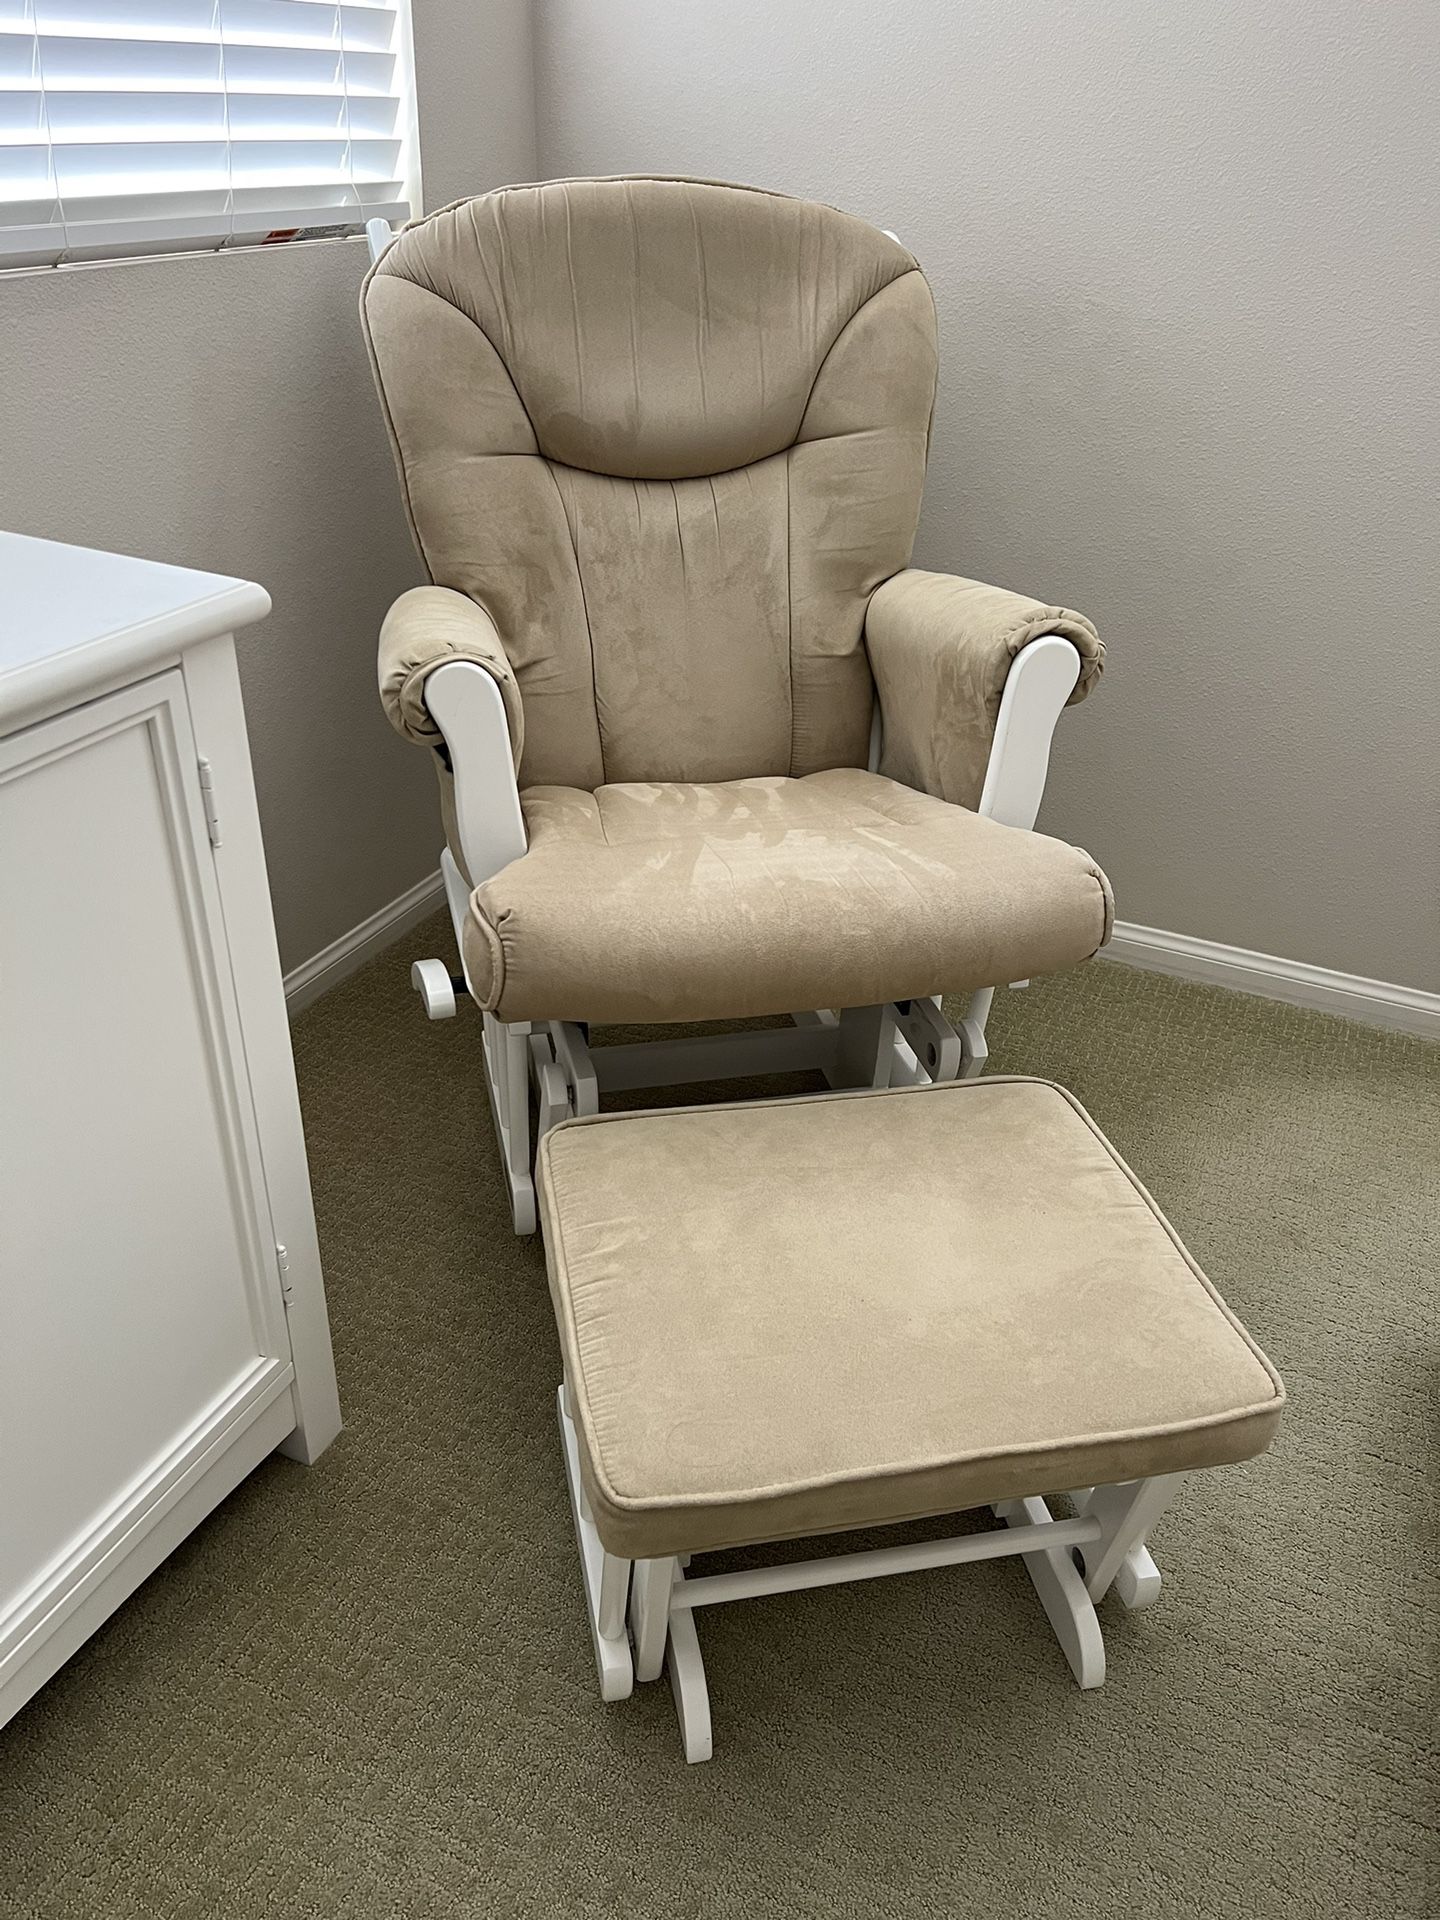 Shermag Glider Rocker and ottoman (Nursing Chair)